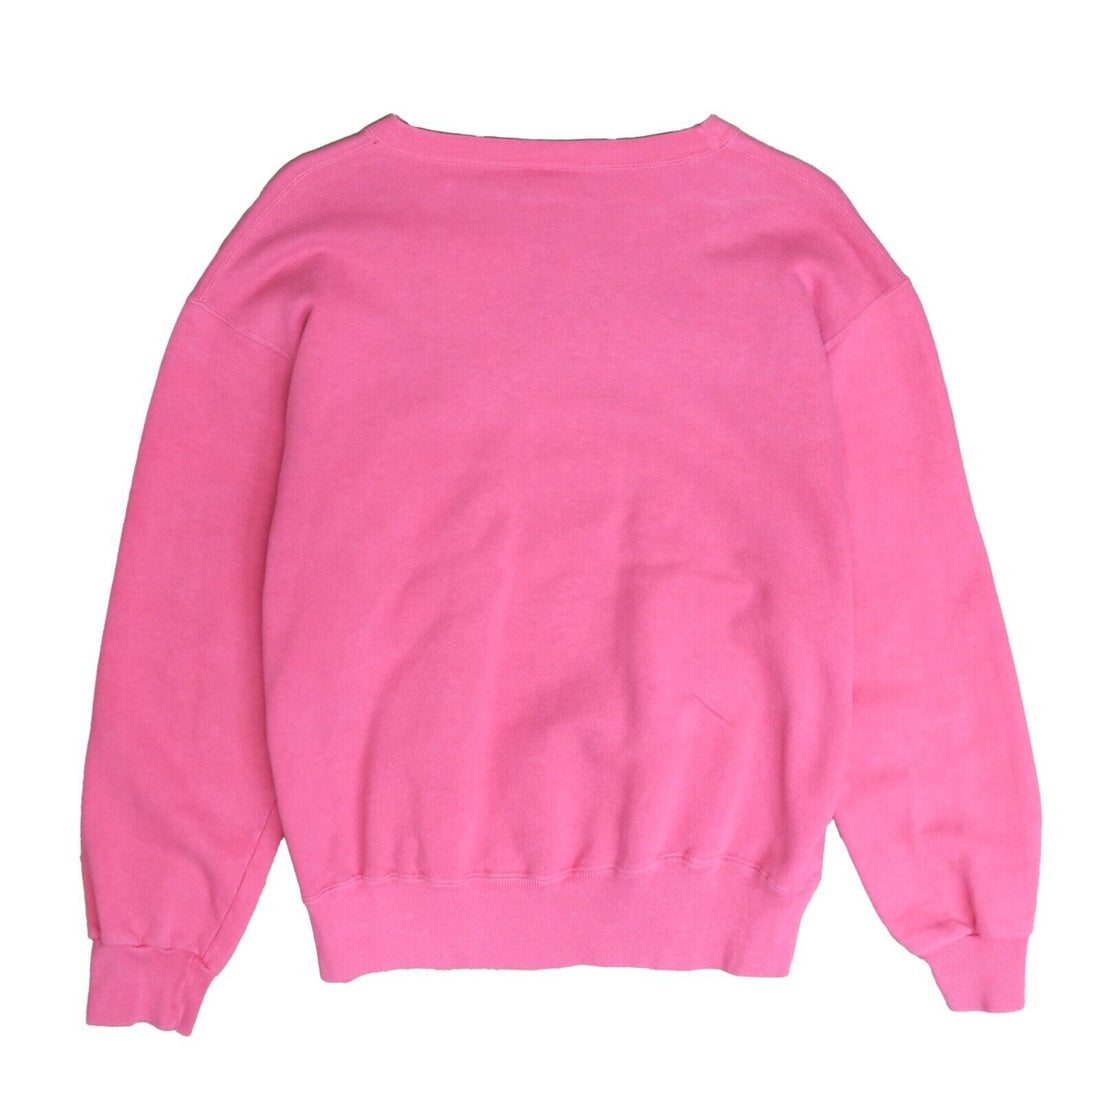 Vintage Champion Spell Out Sweatshirt Crewneck Size XL Pink 80s